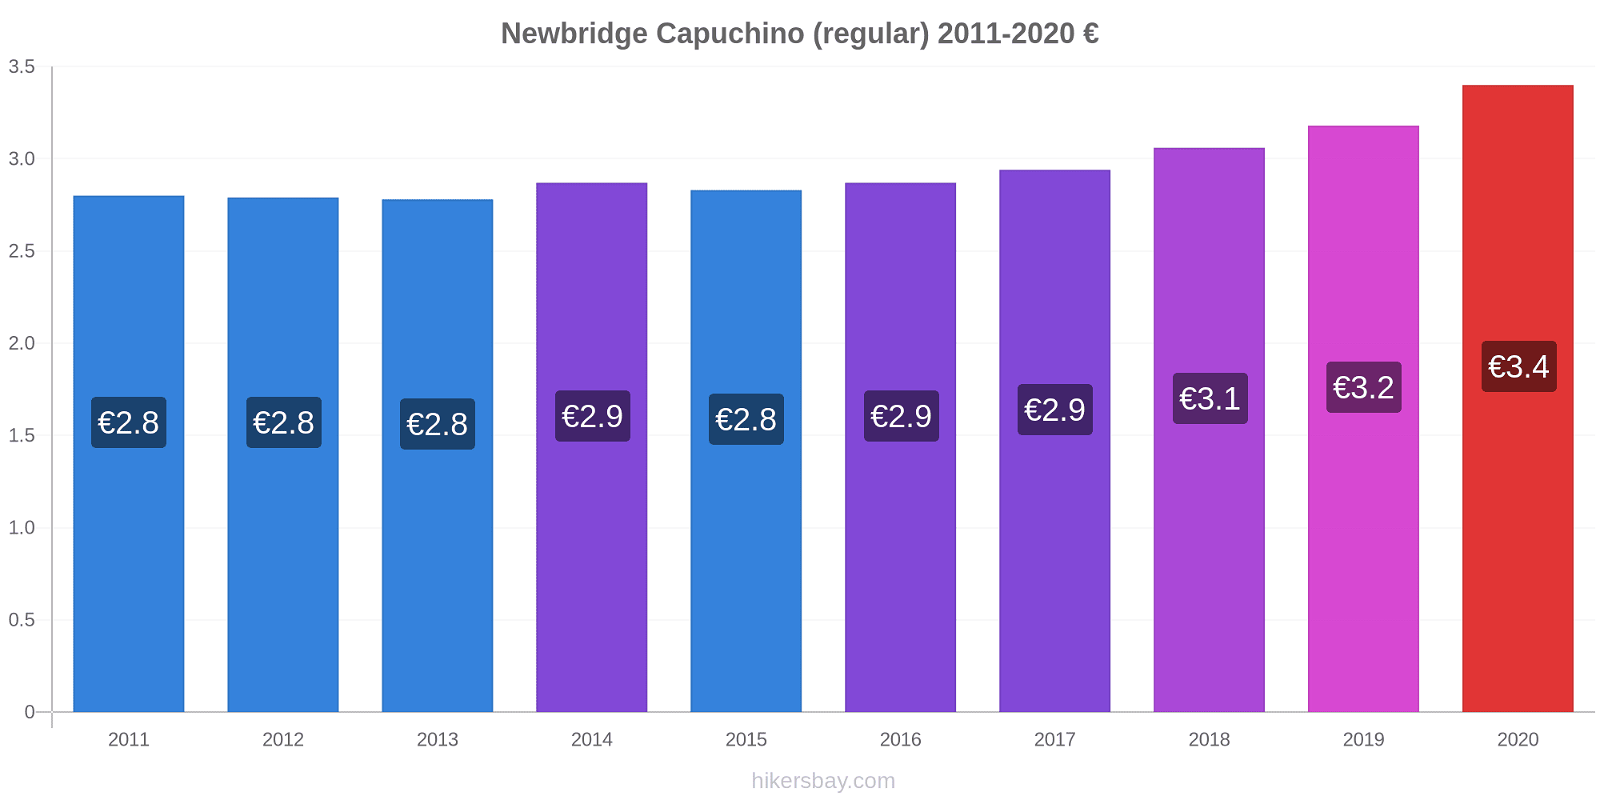 Newbridge cambios de precios Capuchino (regular) hikersbay.com